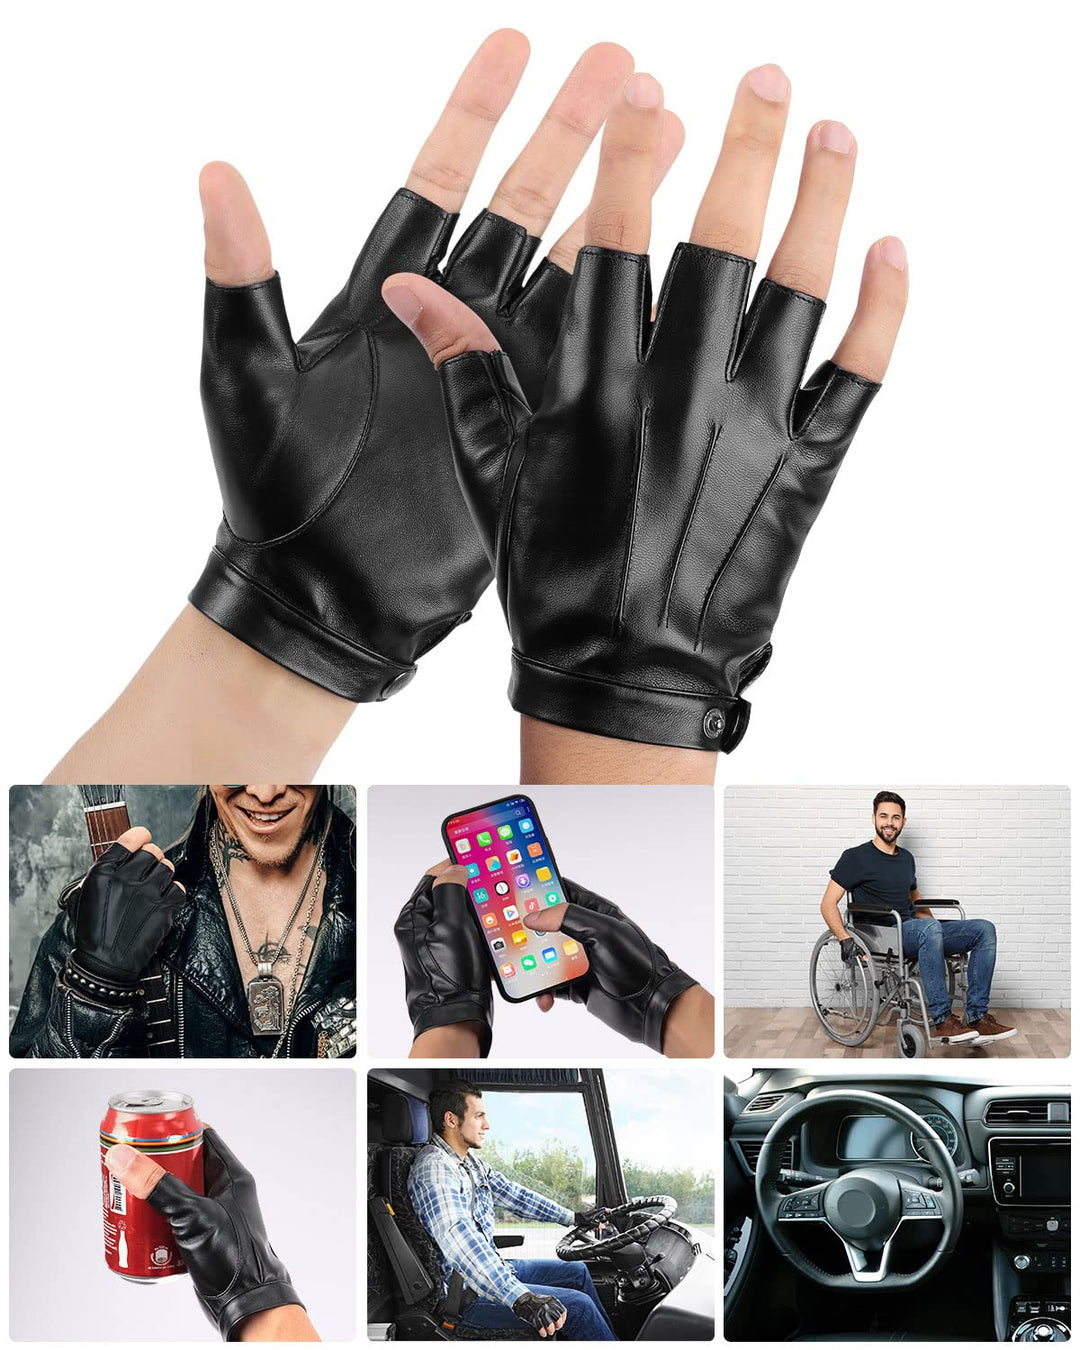 Kemimoto Motorcycle Gloves for Men, Full Finger Hard Knuckle